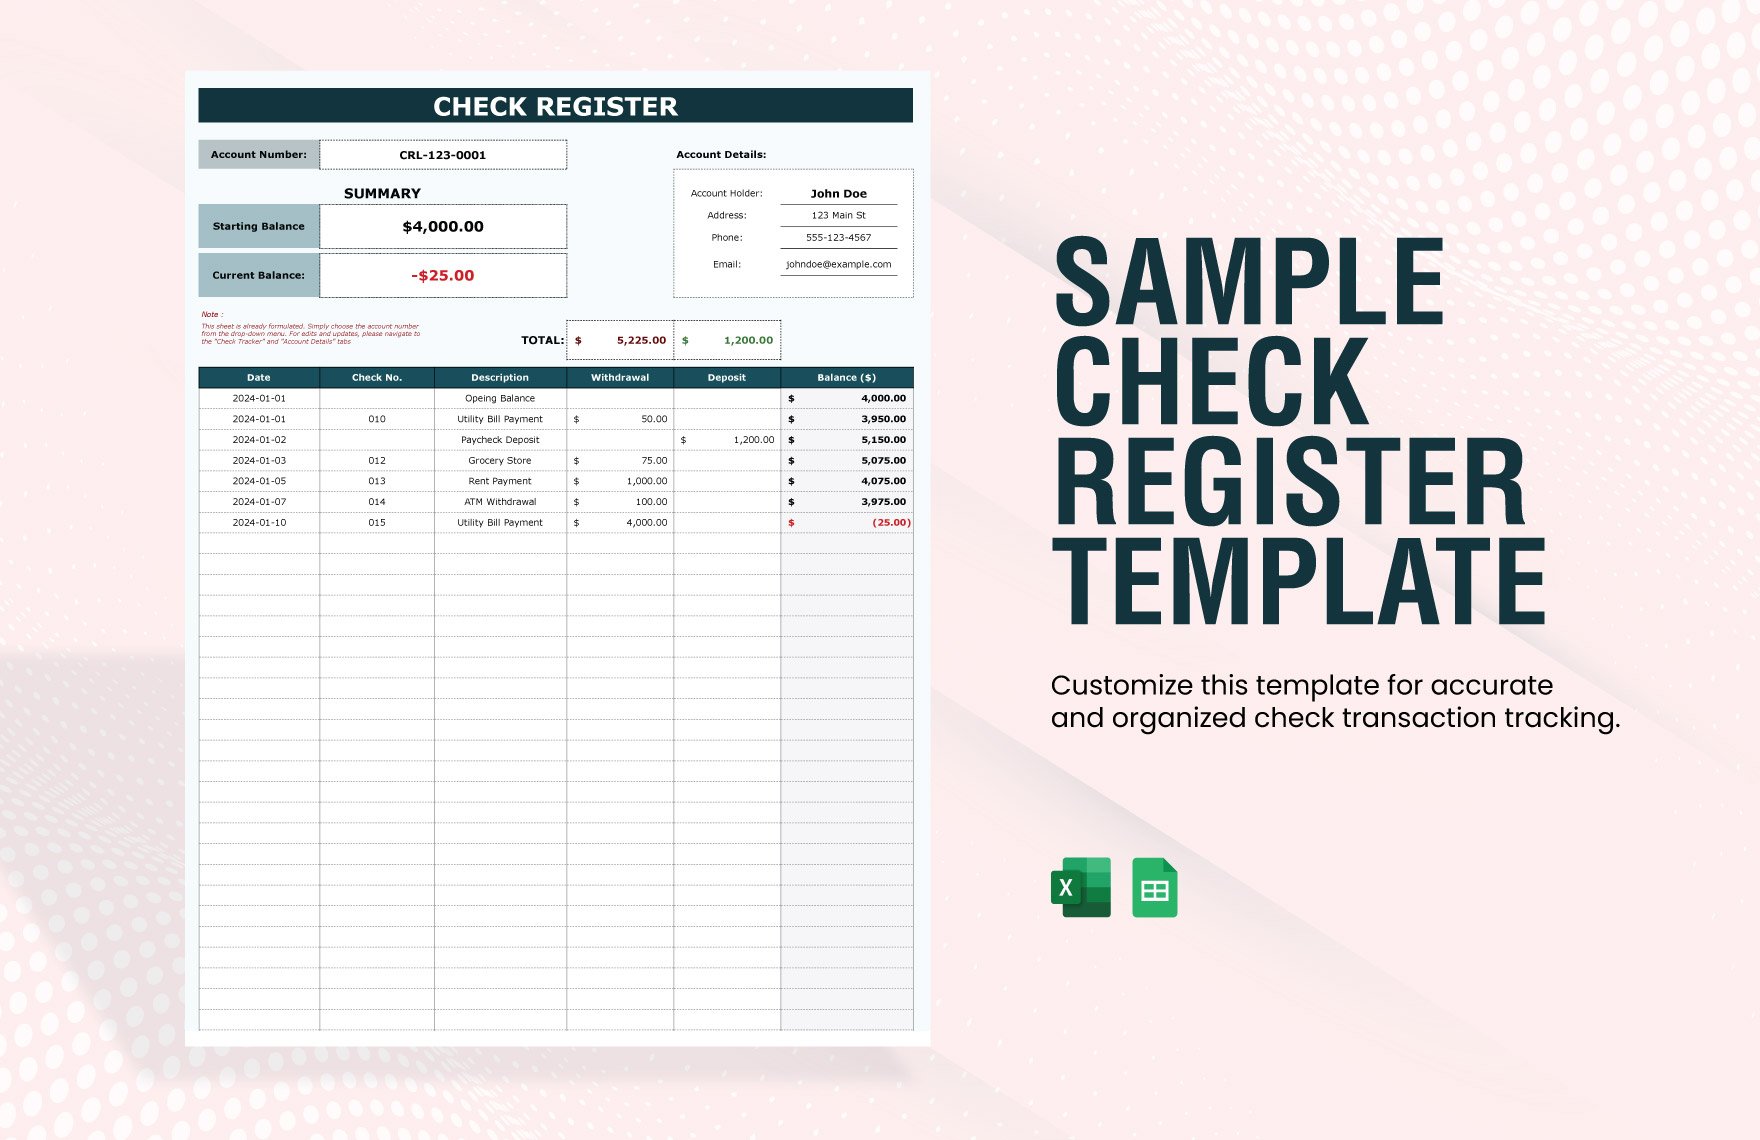 Sample Check Register Template